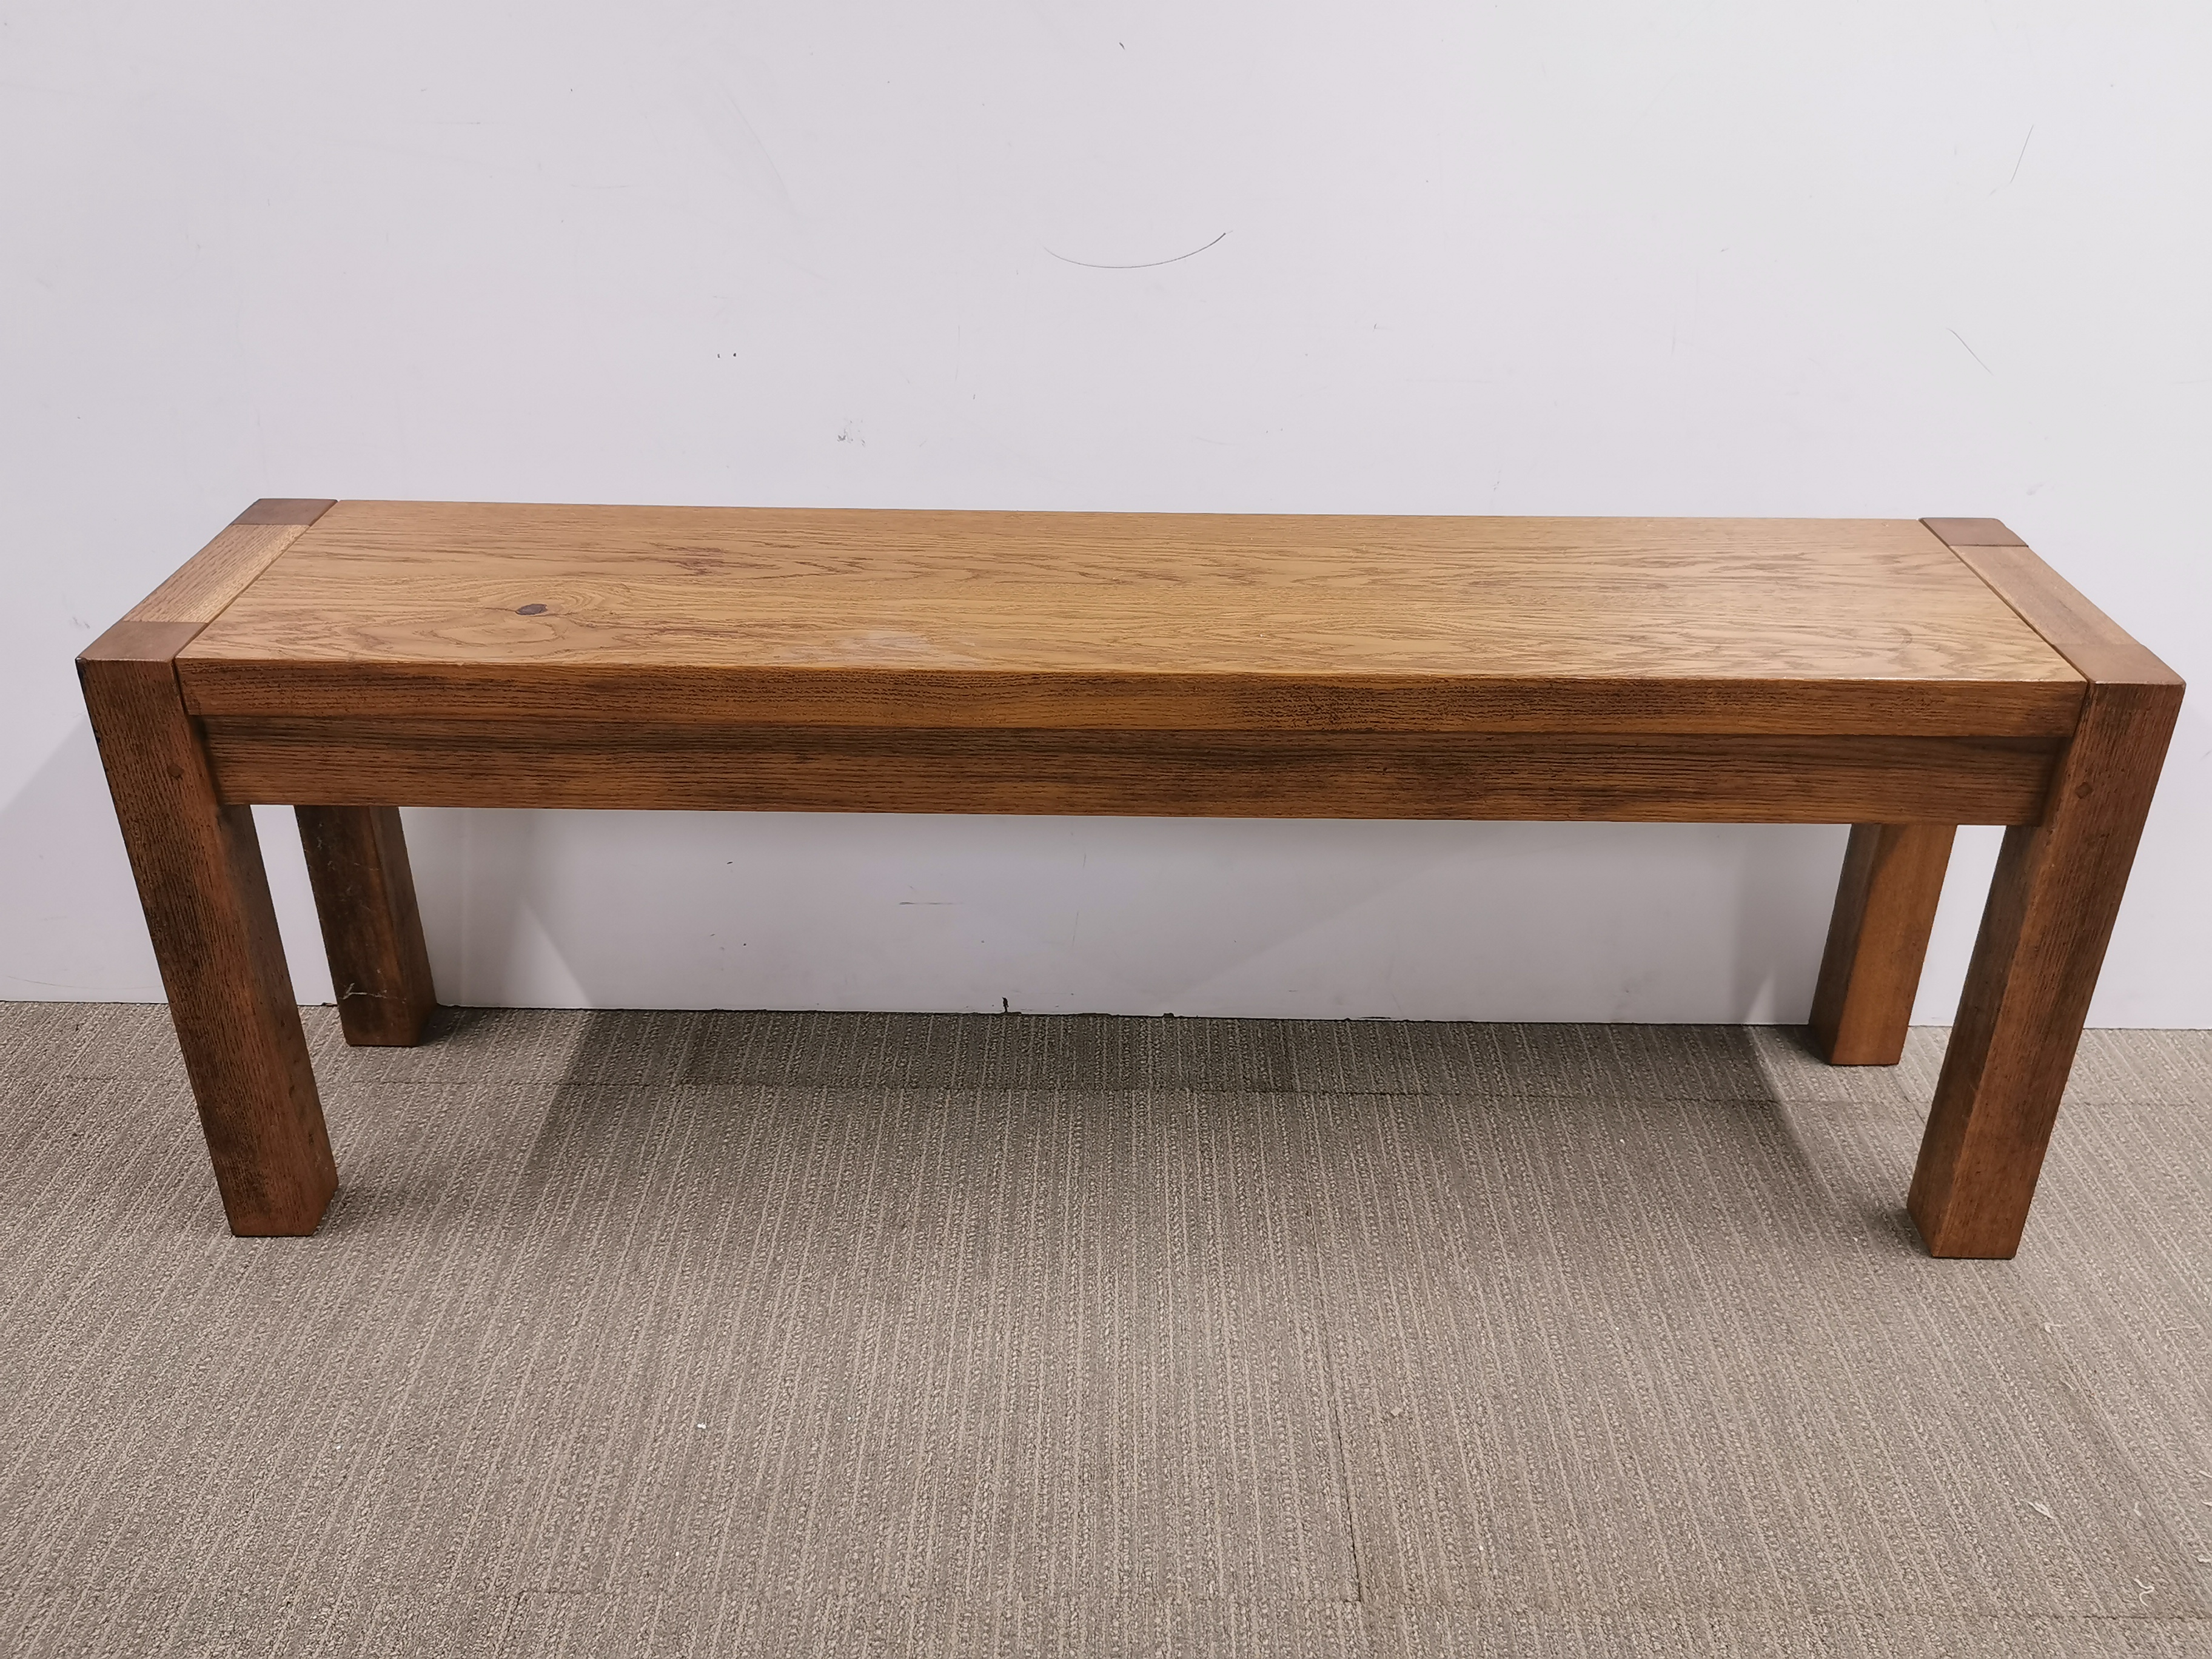 A heavy oak coffee table, 130 x 29 x 46cm.